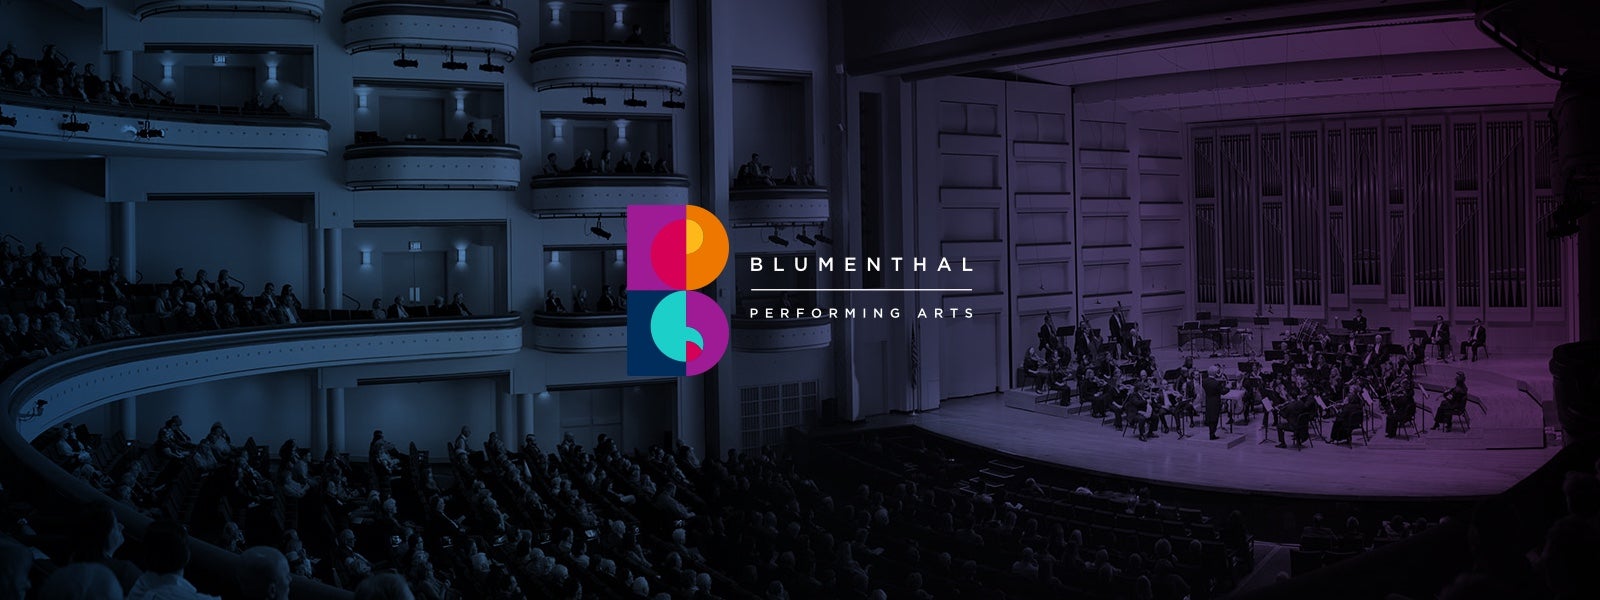 Blumenthal Performing Arts Website | https://www.blumenthalarts.org/